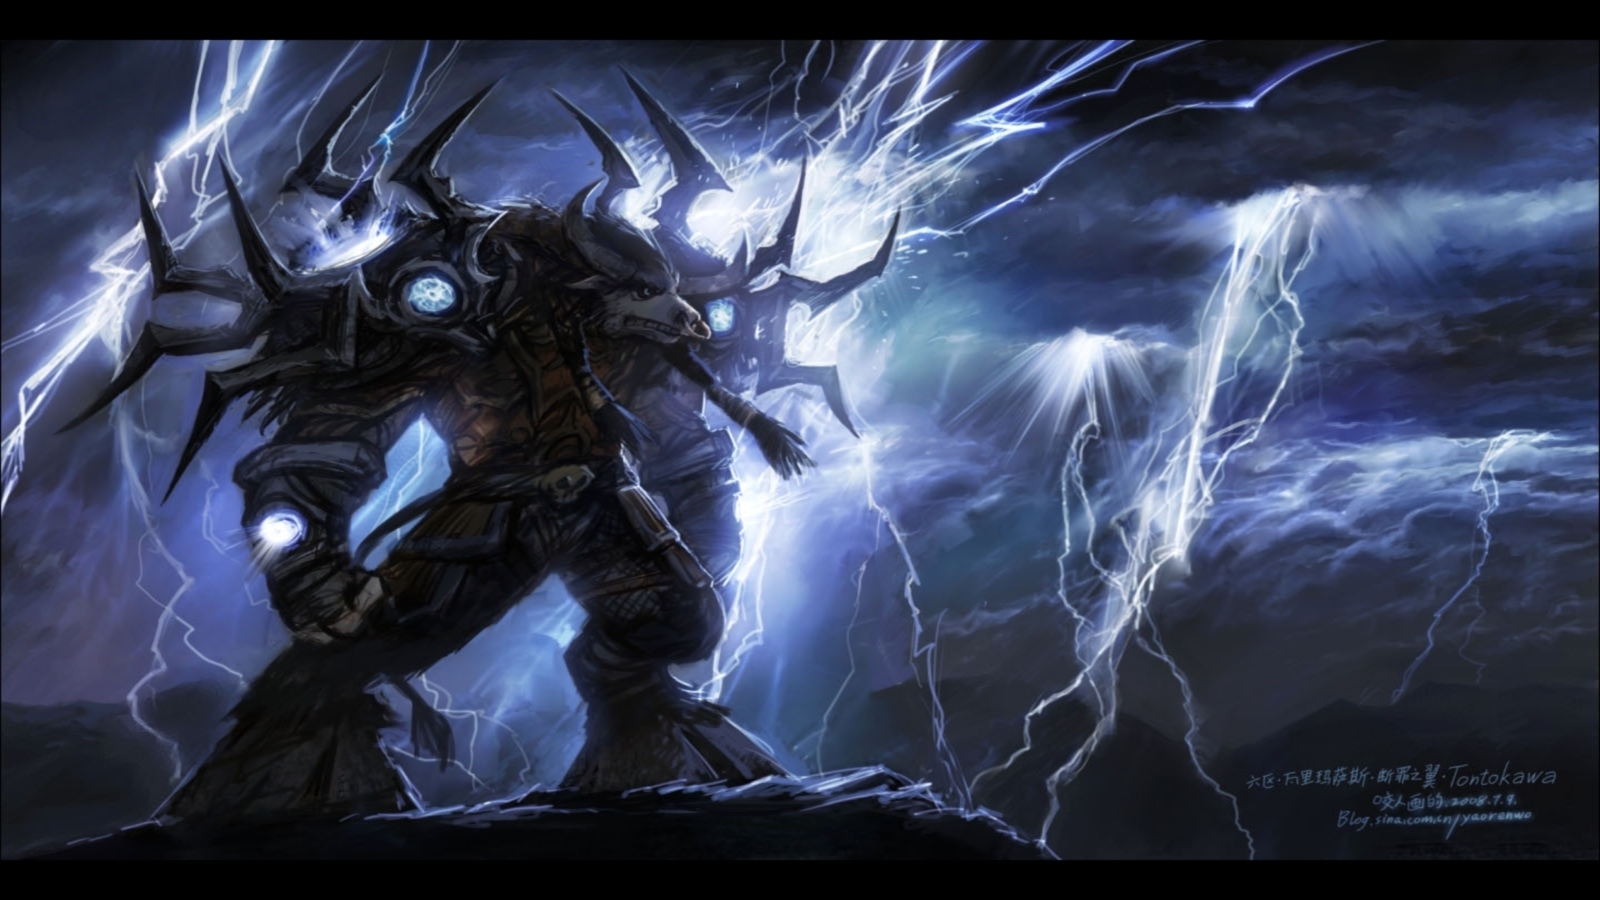 Wallpaper Video Games World Of Warcraft